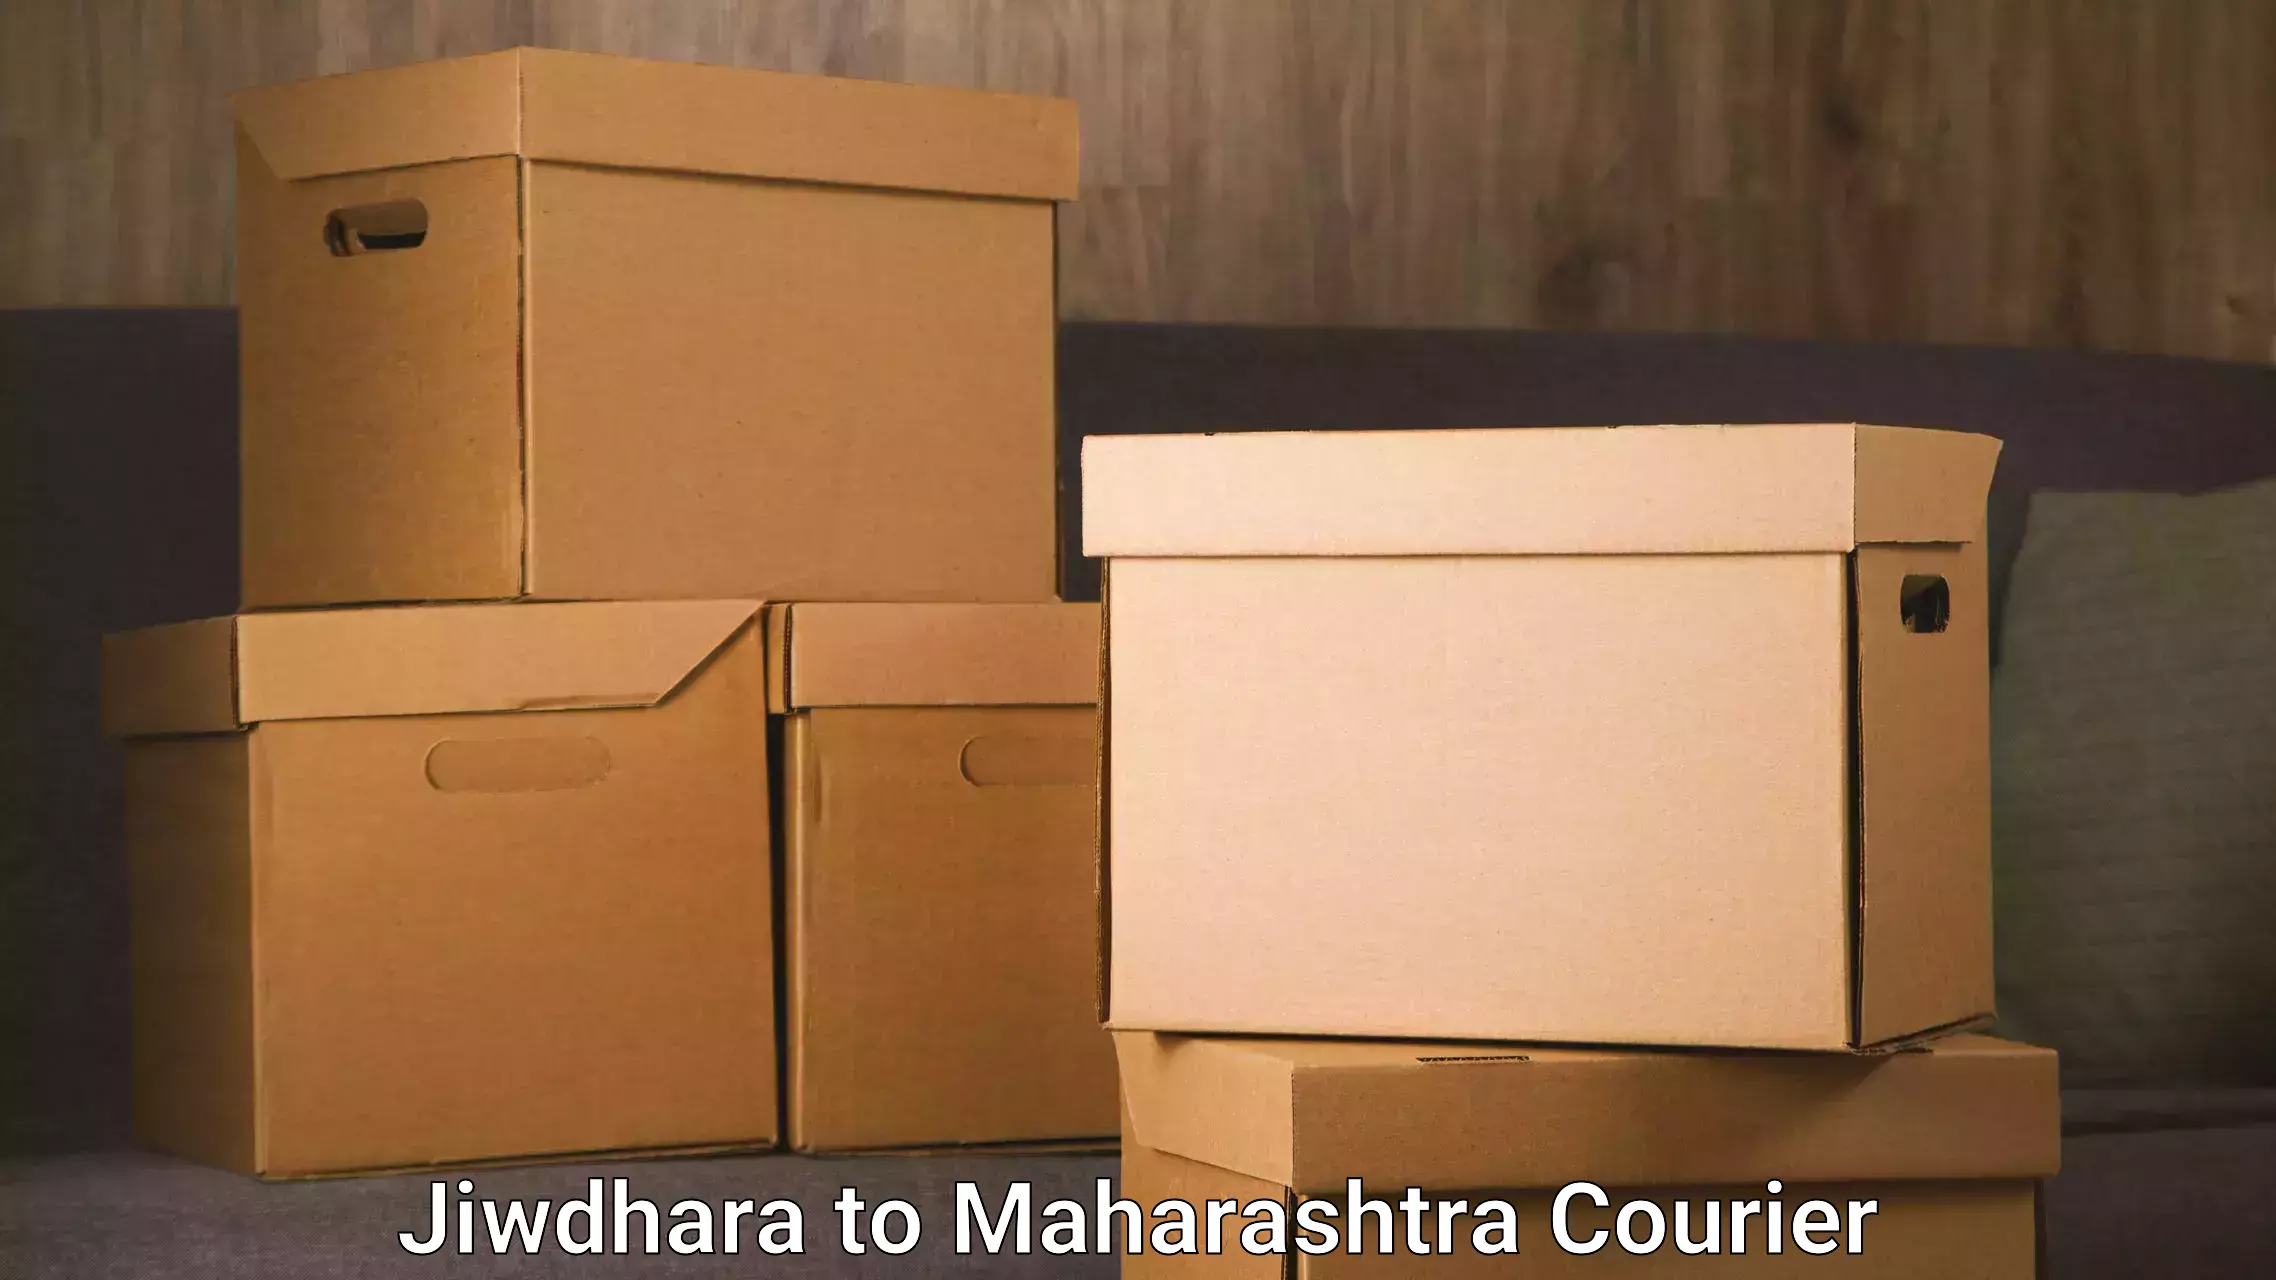 Professional moving company Jiwdhara to Maharashtra